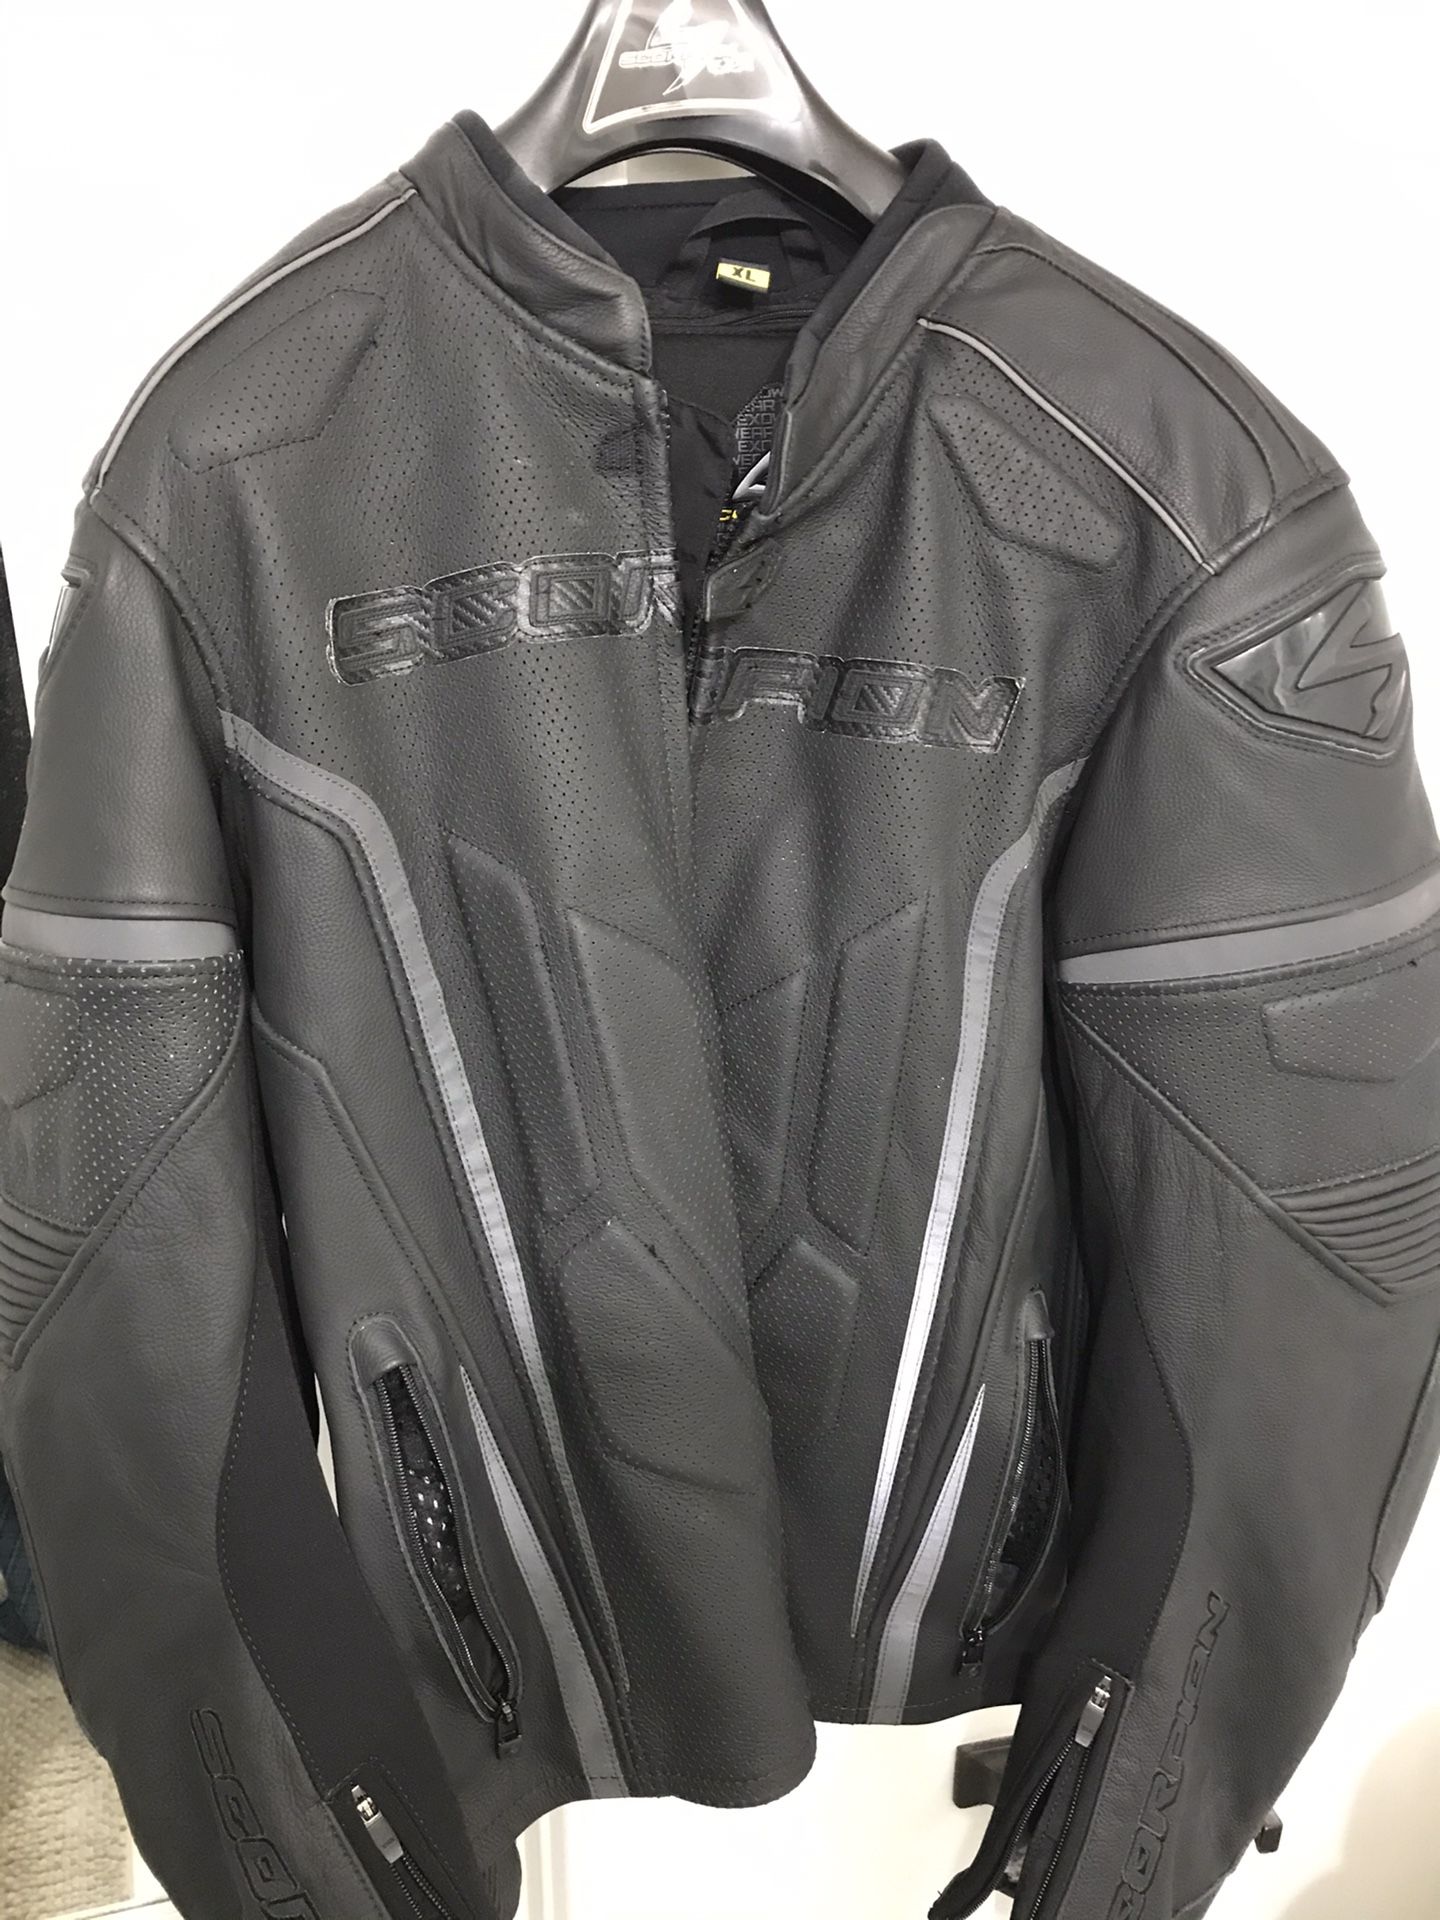 Scorpions leather jacket XL